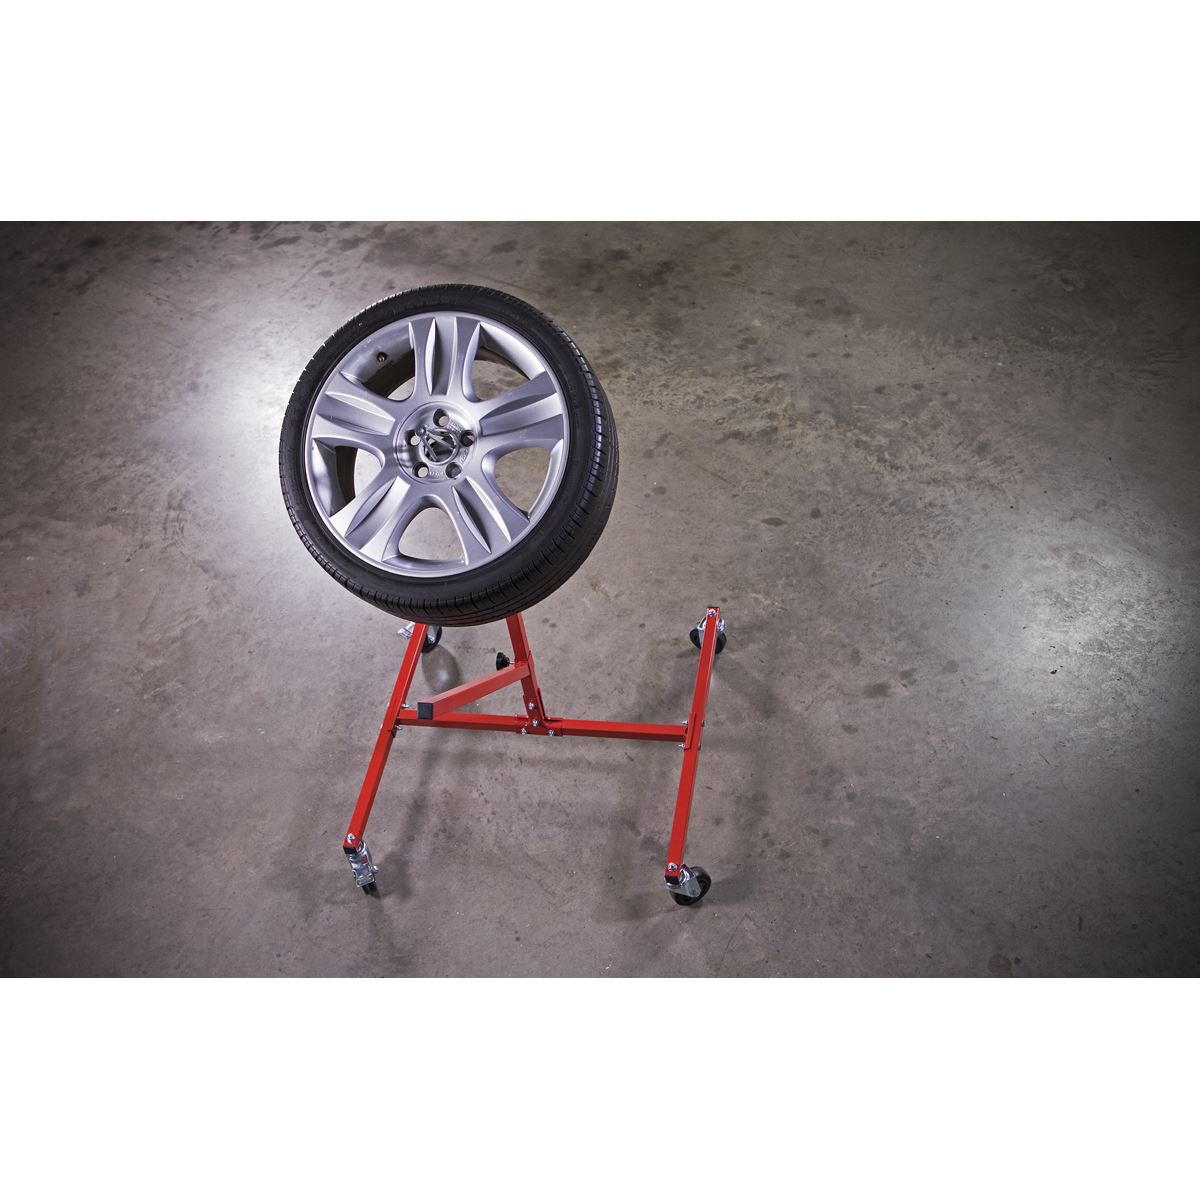 Sealey Alloy Wheel Painting/Repair Stand - Single Wheel Capacity